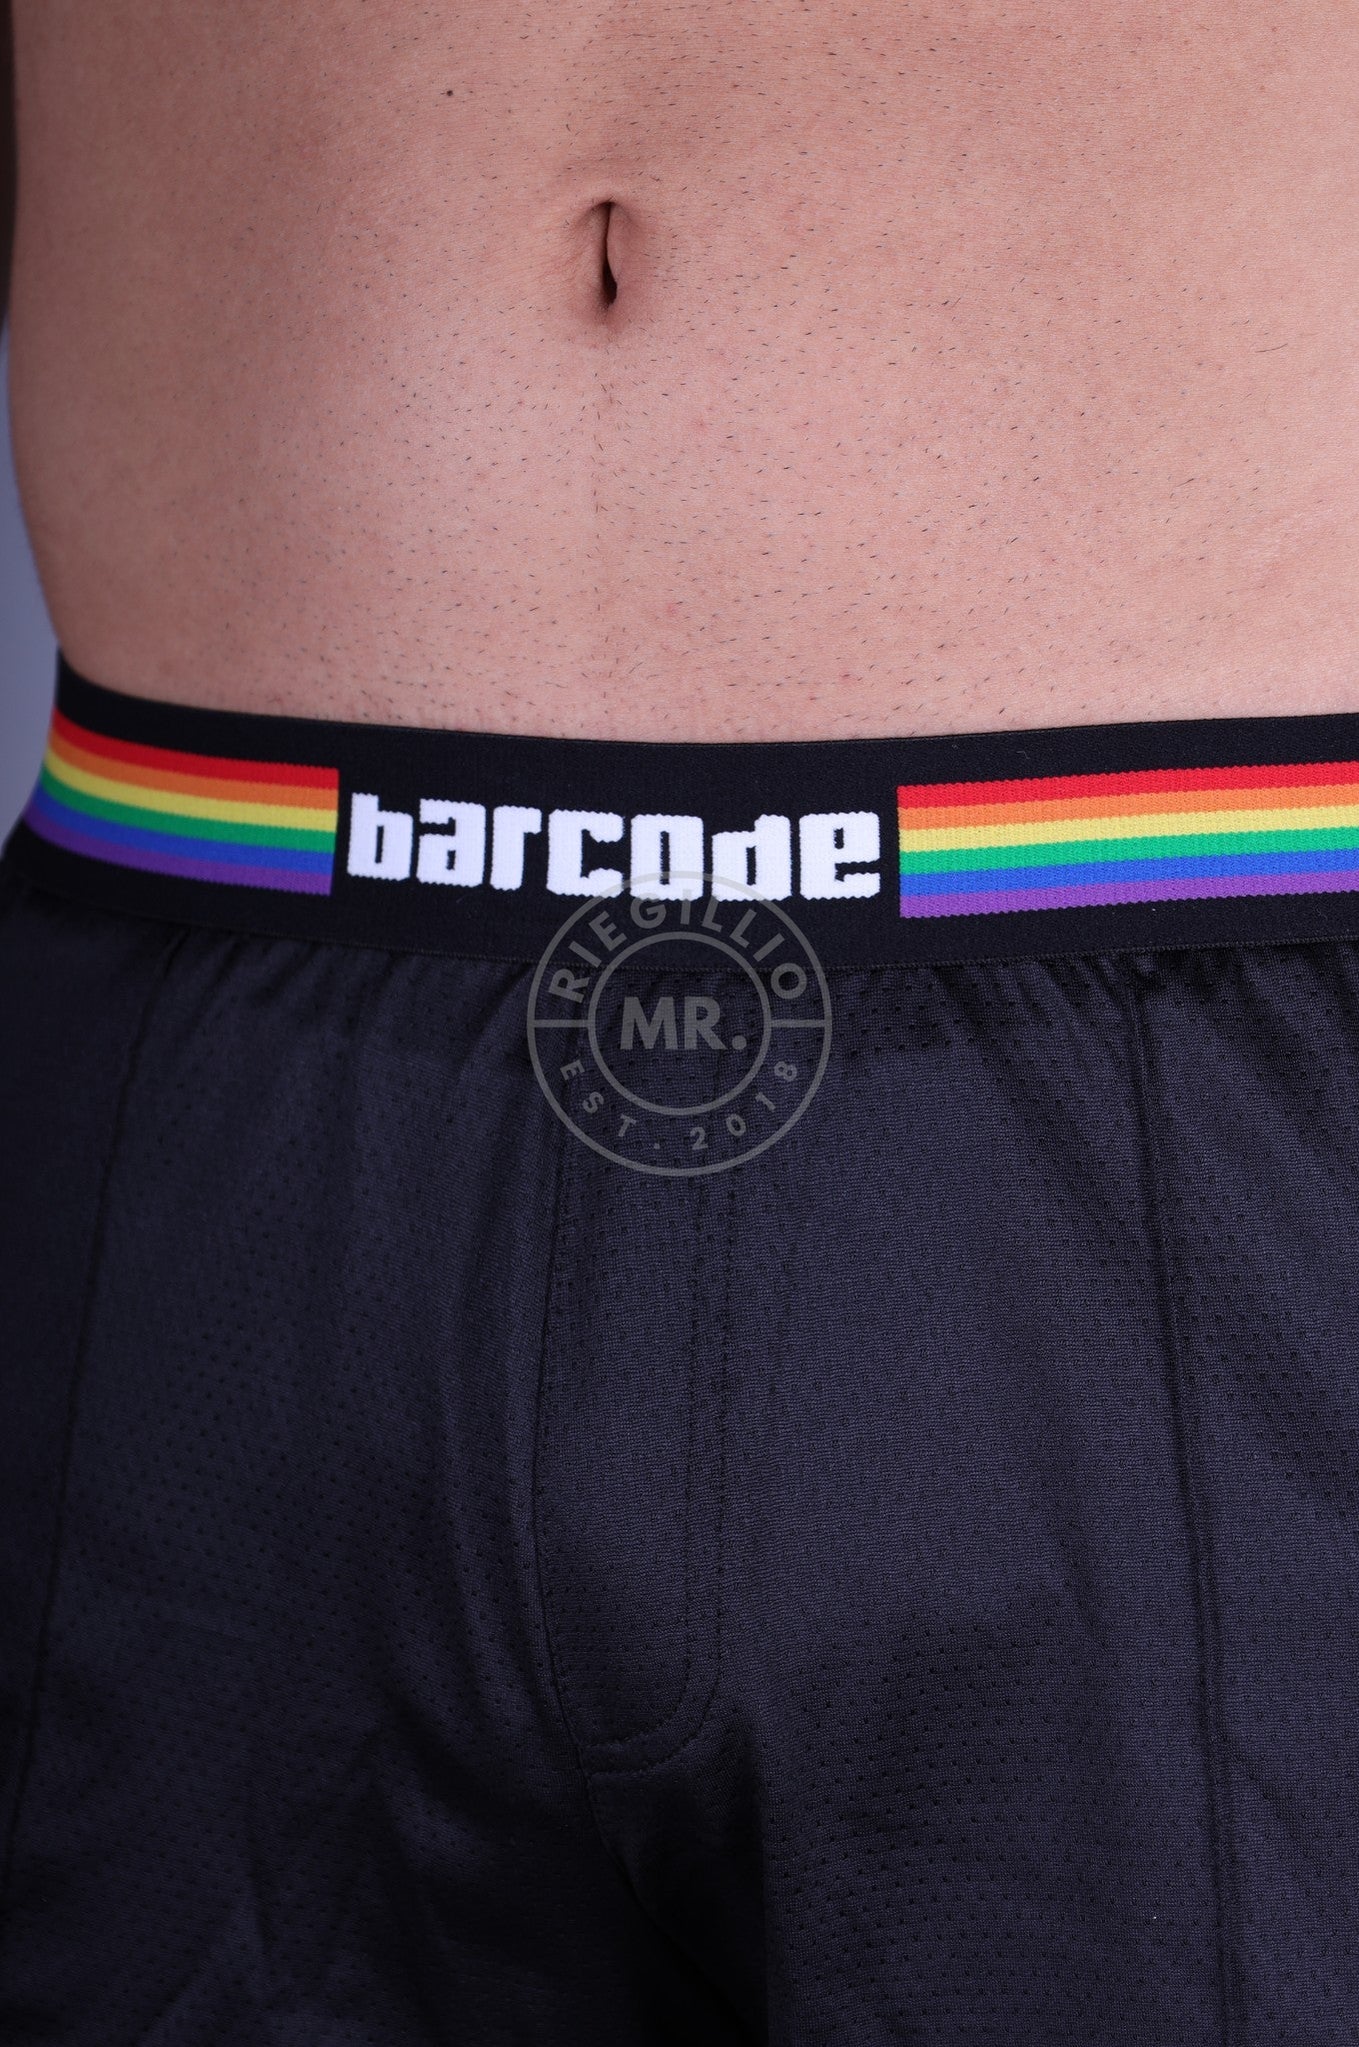 Barcode Pride Short - Black at MR. Riegillio